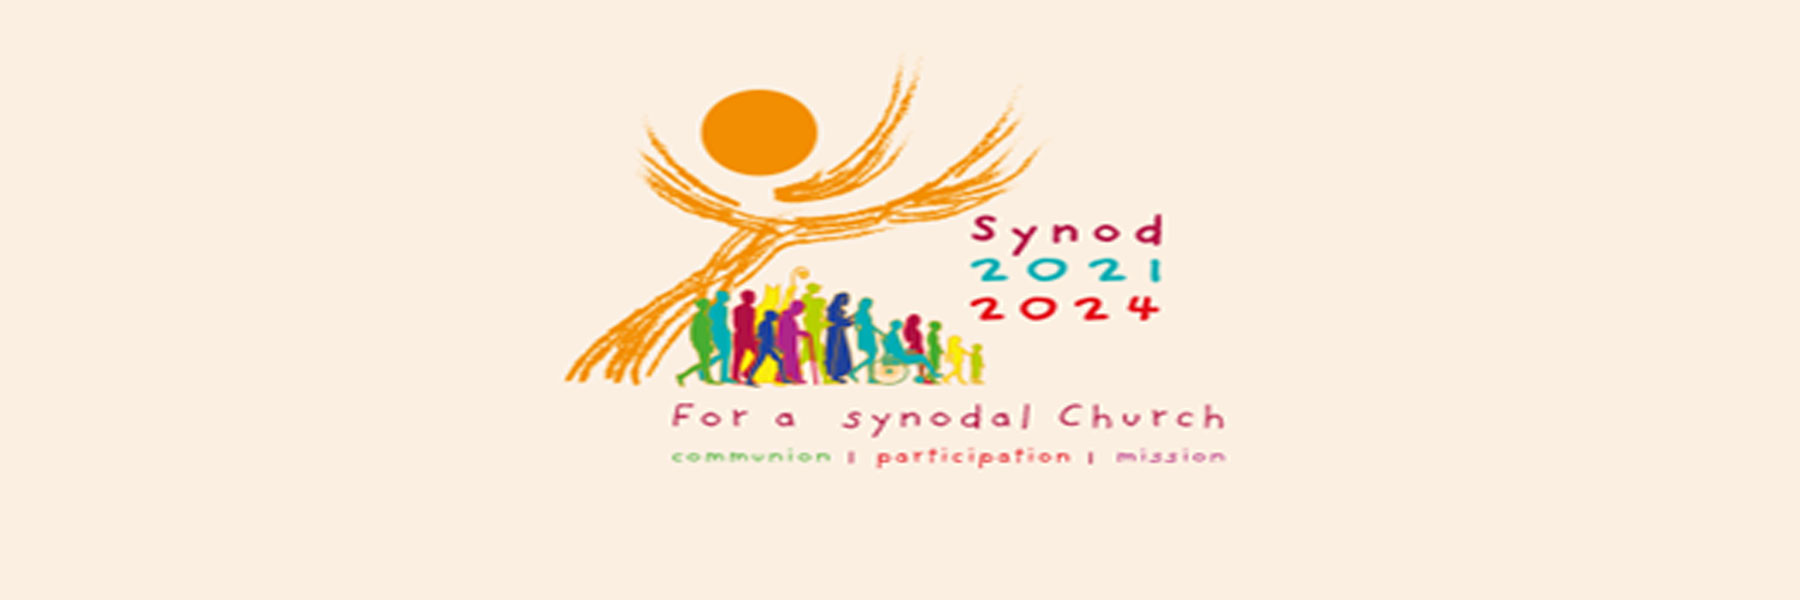 Synod listening session 2024 St. John the Baptist